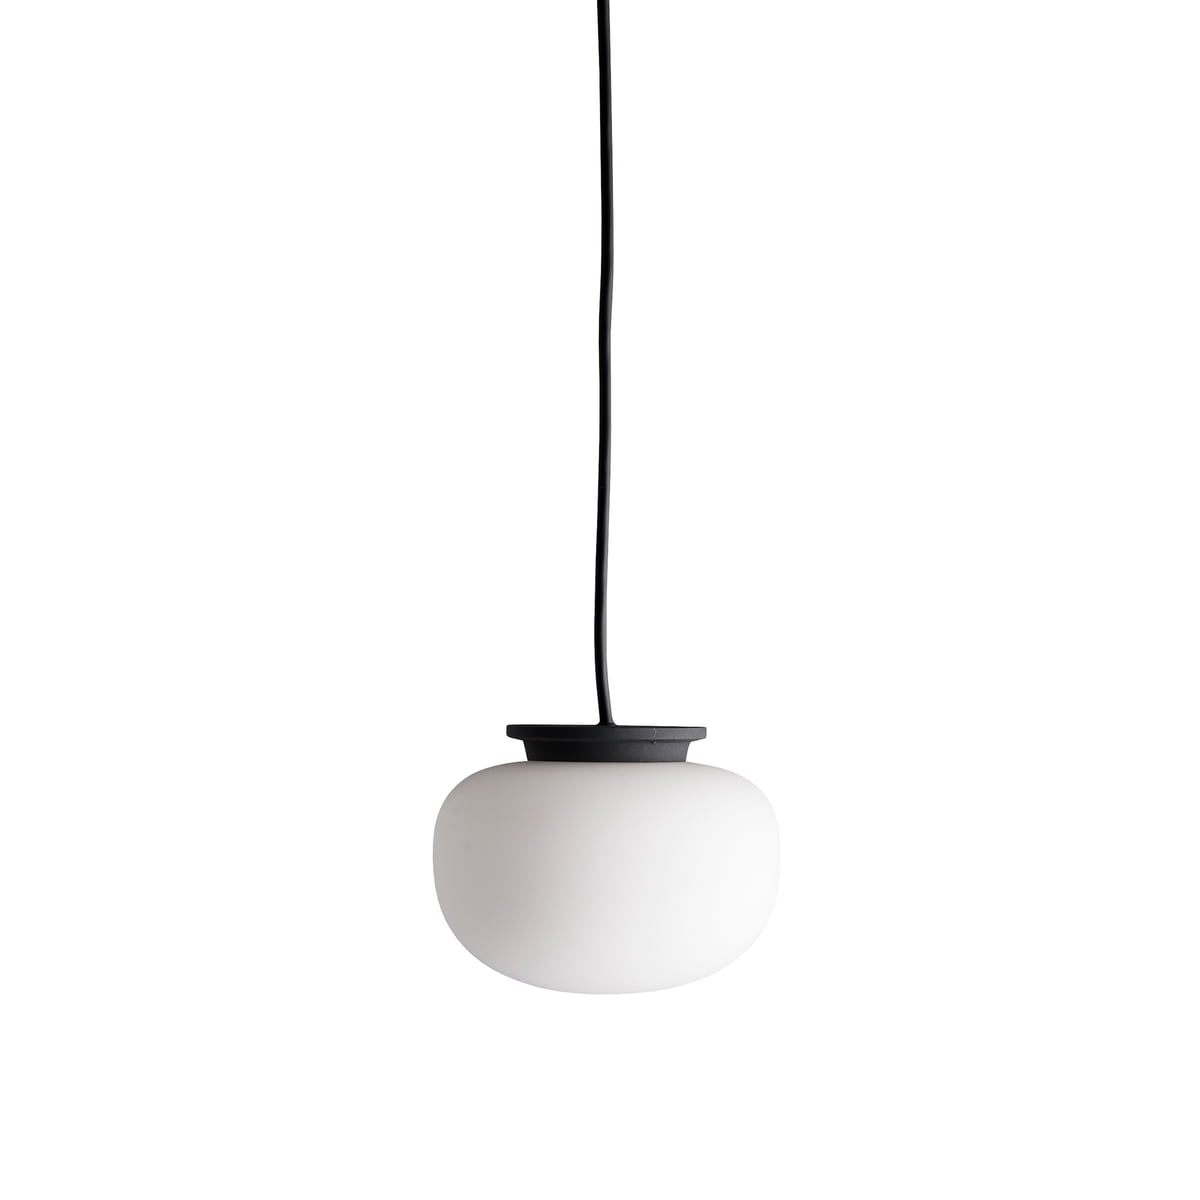 frandsen - supernate lampe suspendue, ø 13 x 10 h cm, blanc opale / noir